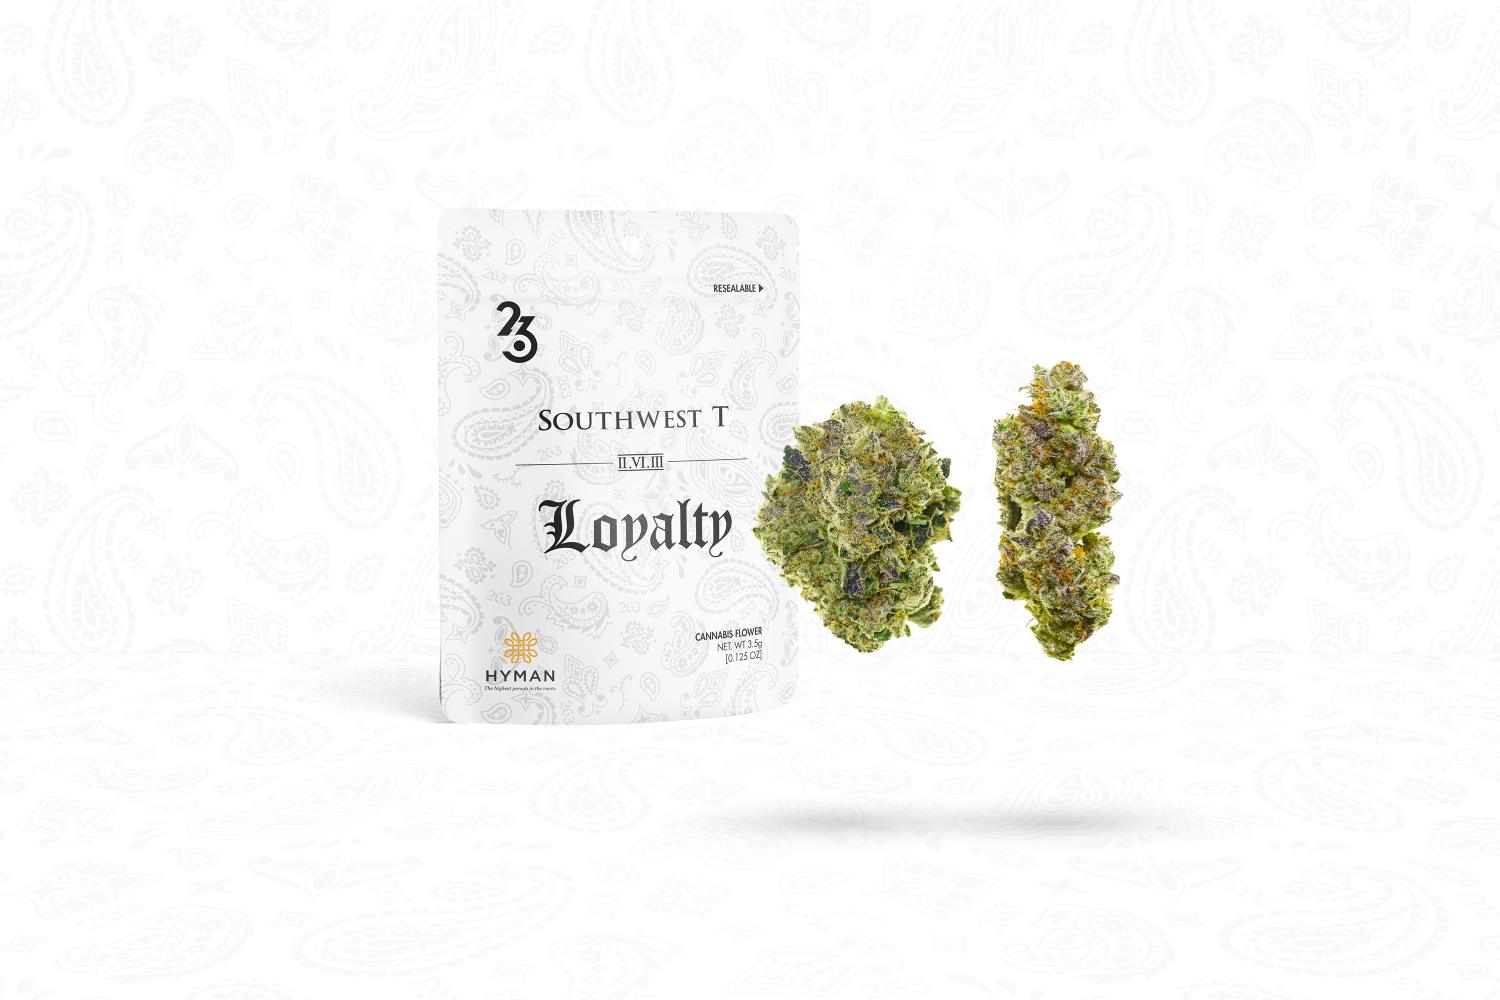 Southwest Tee Loyalty , Weed Buds, Hyman Cannabis Strain